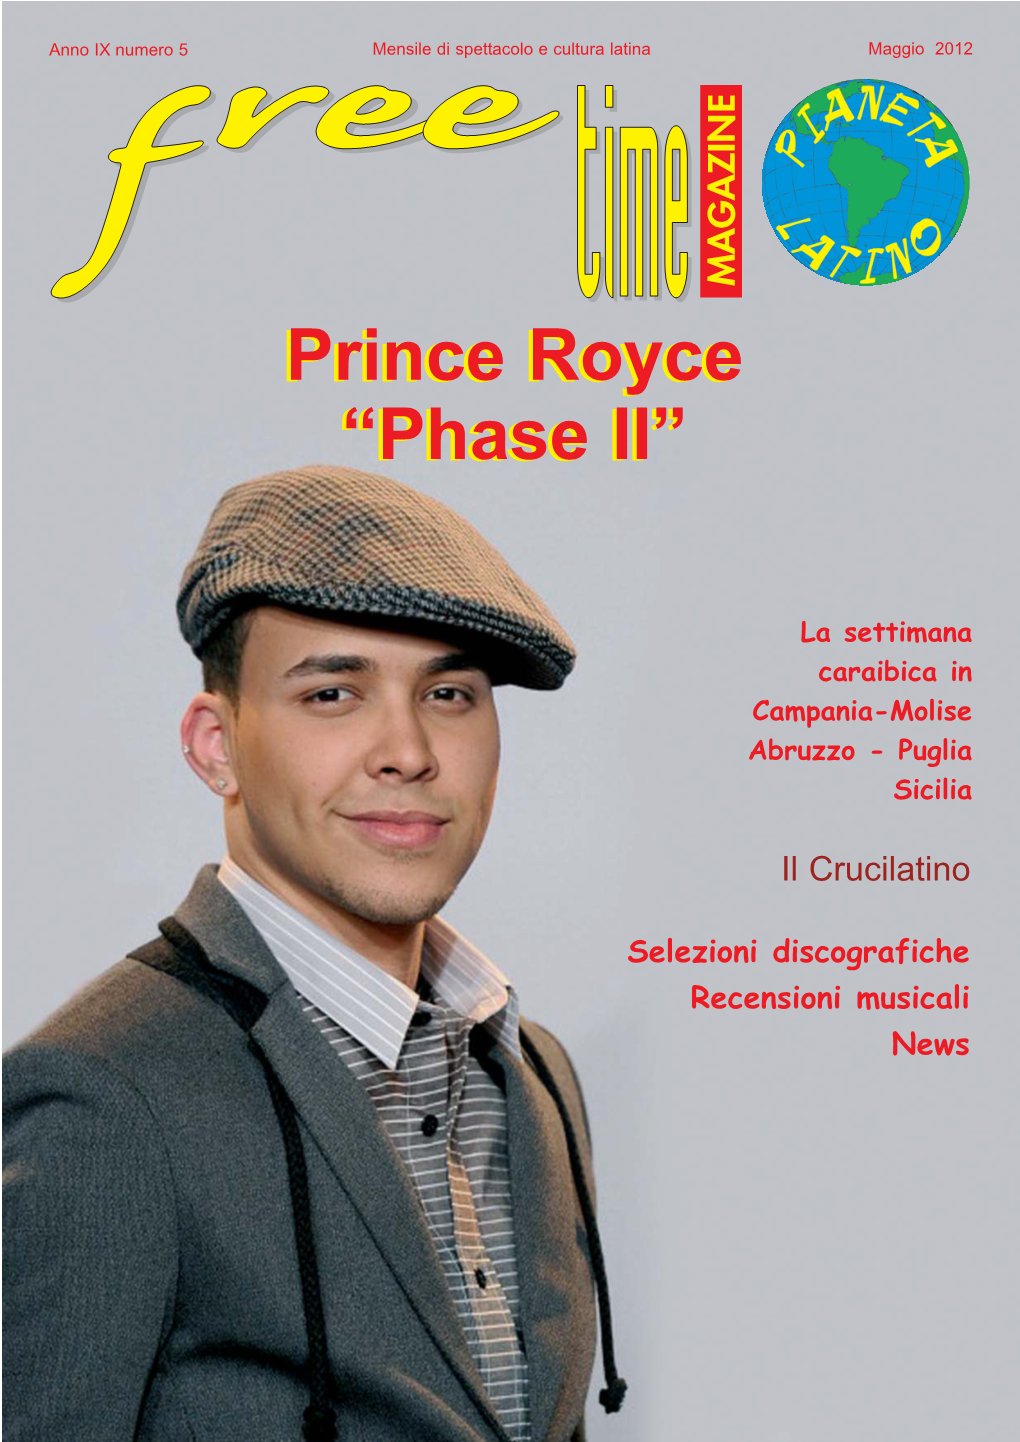 Prince Royce “Phase II” Prince Royce “Phase